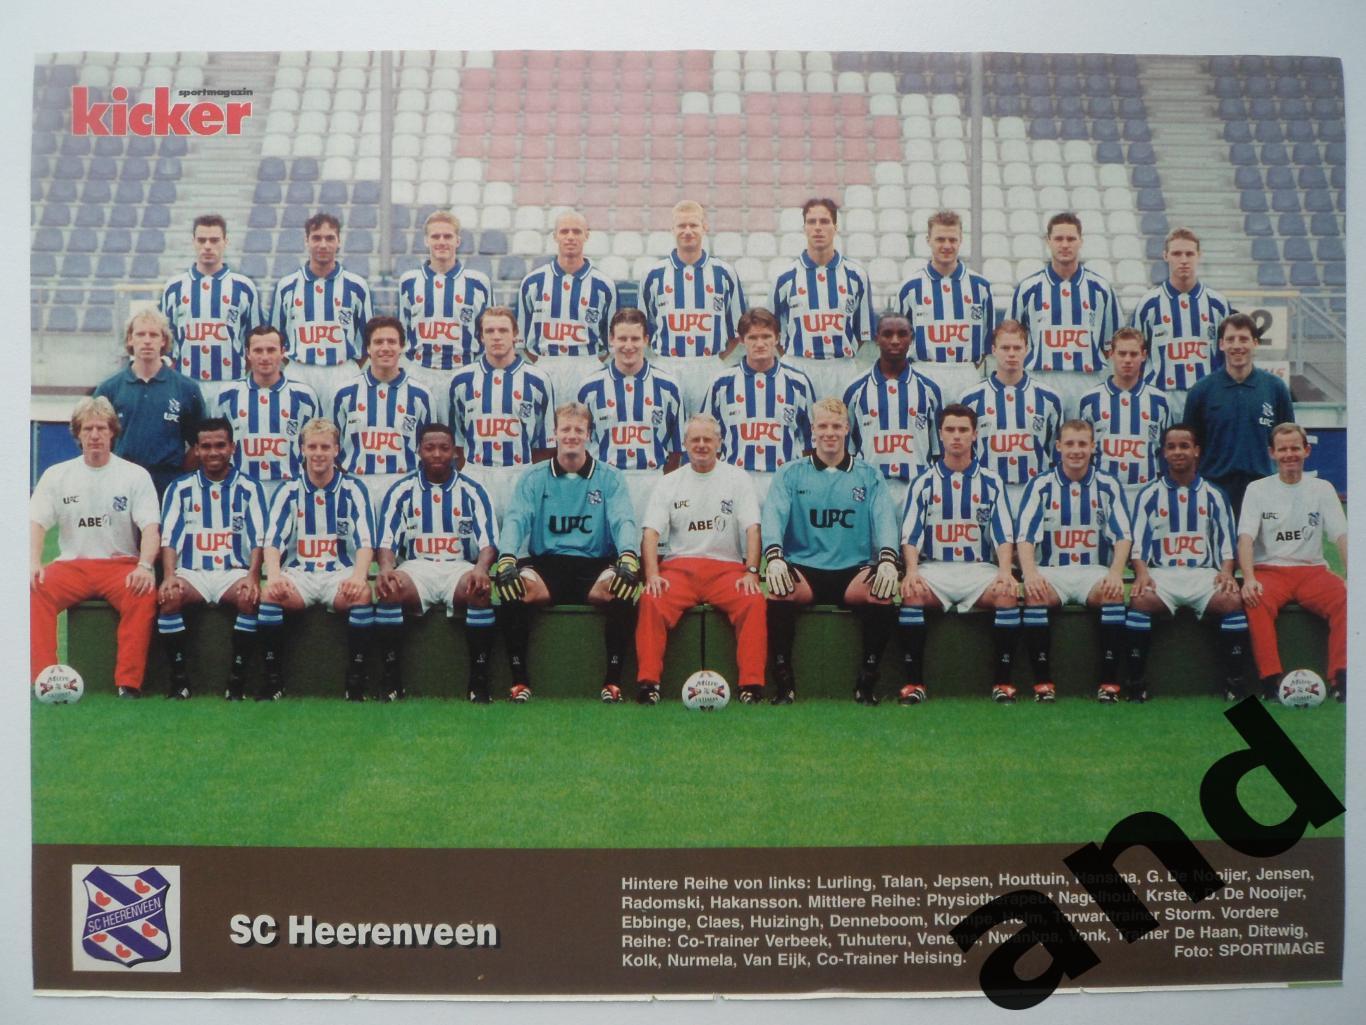 постер Херенвен 2000 - Kicker